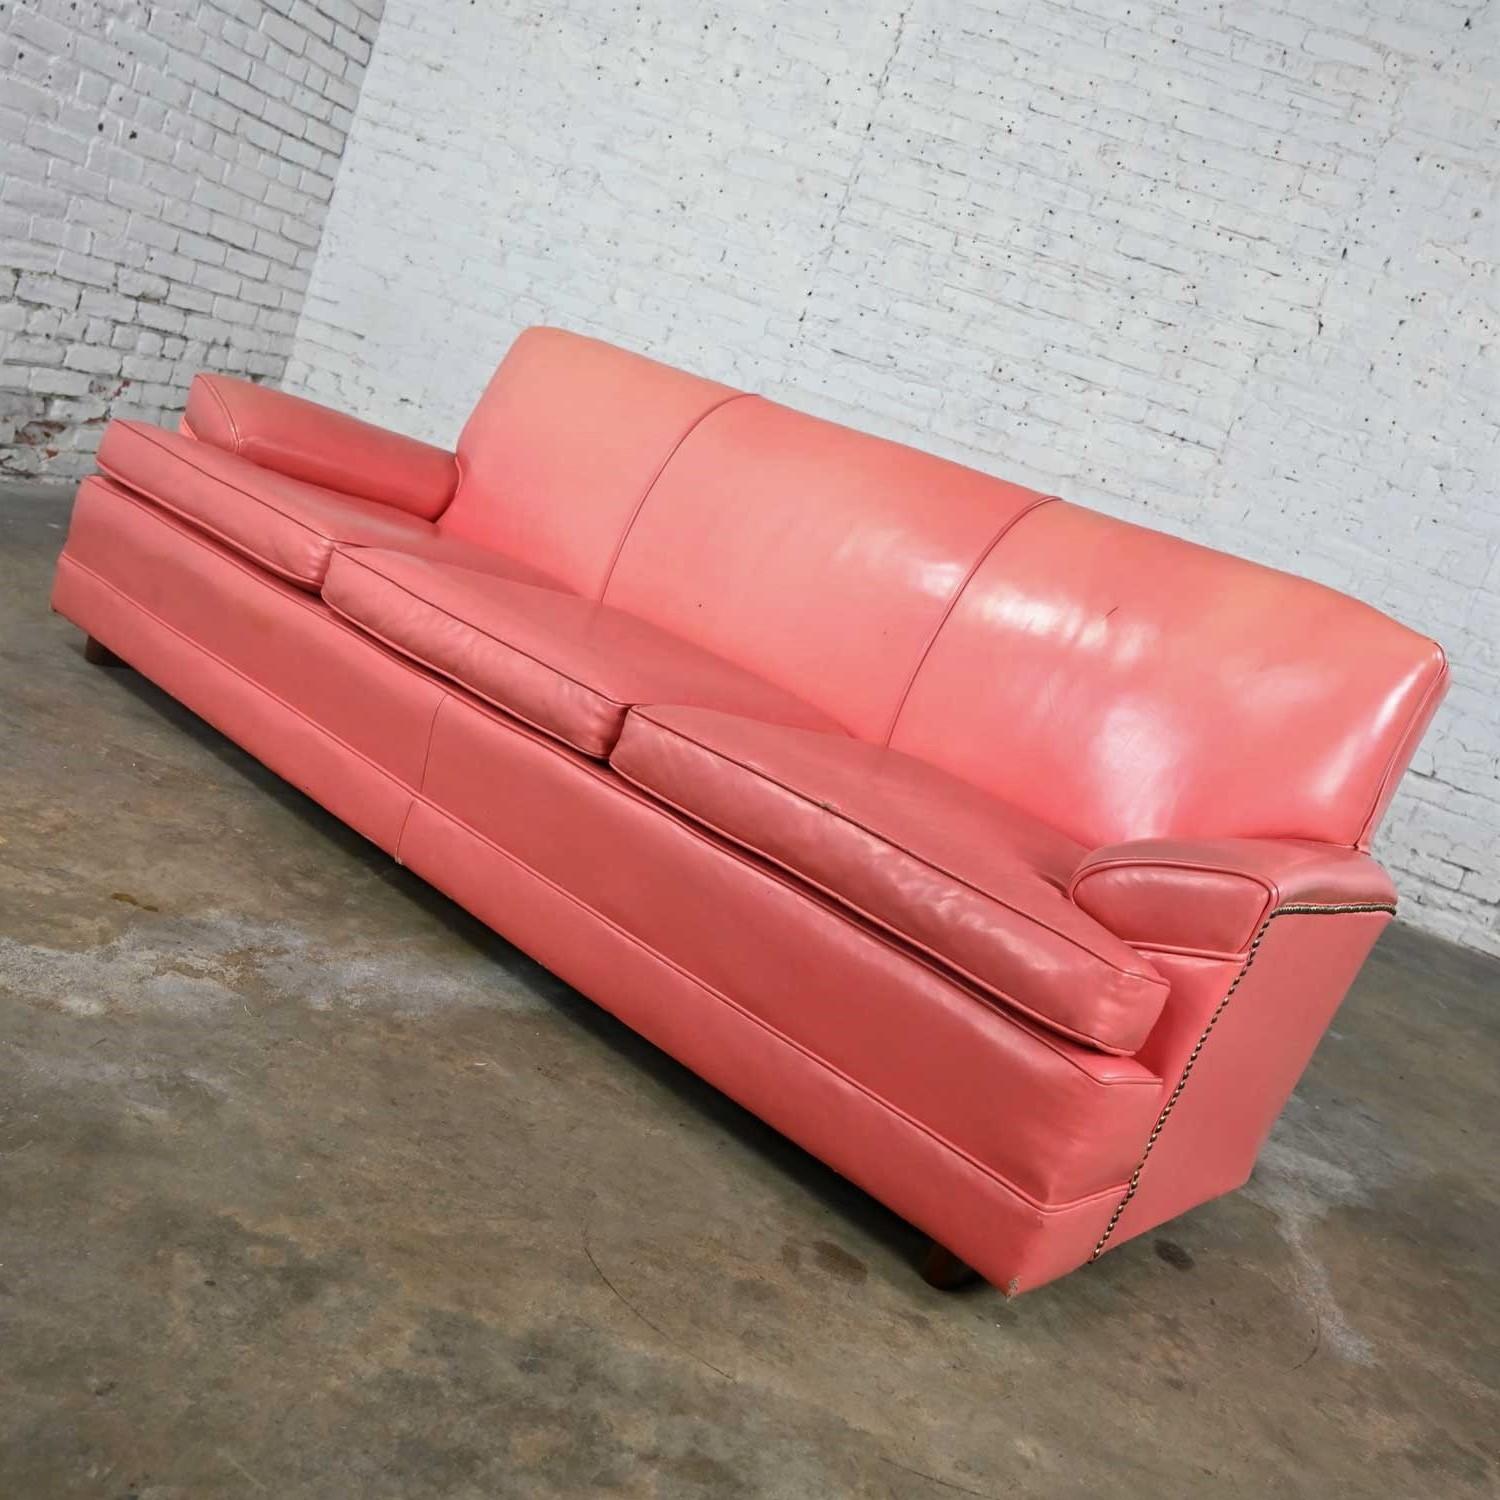 Vintage Hollywood Regency Art Deco Sofa with Original Pink Distressed Leather 5